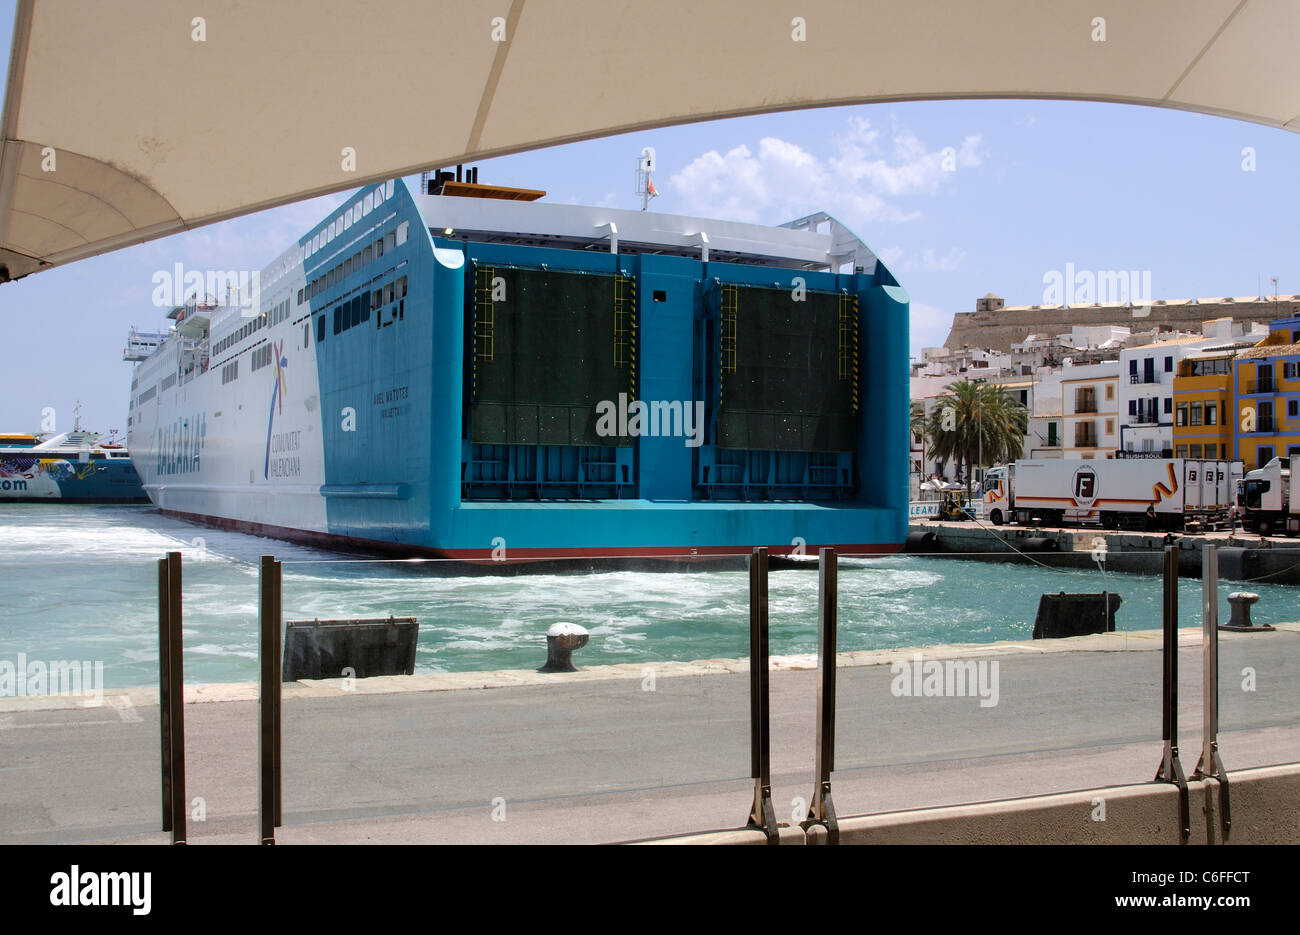 The roro ferry Abel Matutes in the port of Eivissa in Ibiza a Spanish Island Stock Photo